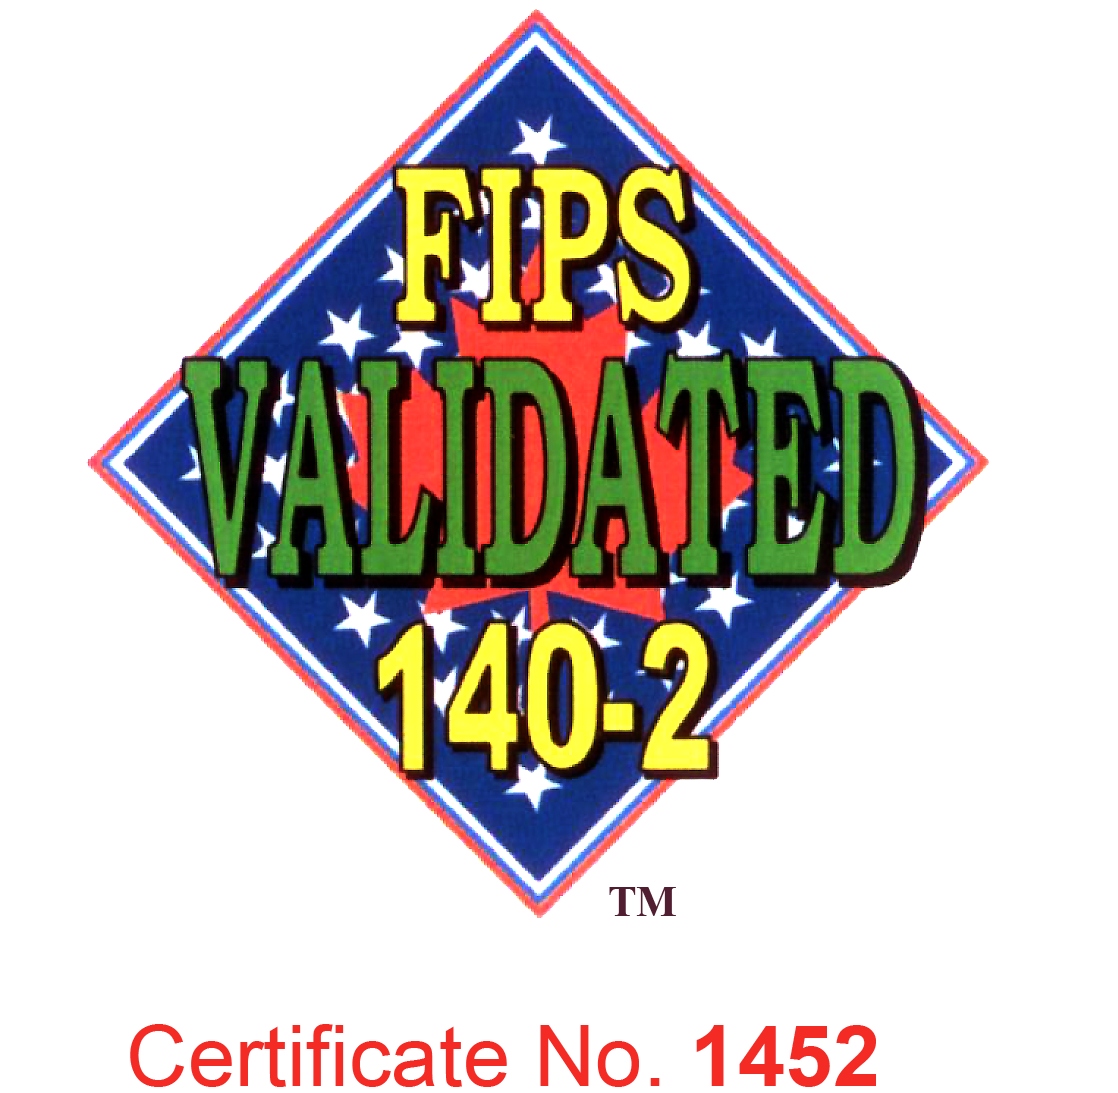 FIPS 140-2 Certification